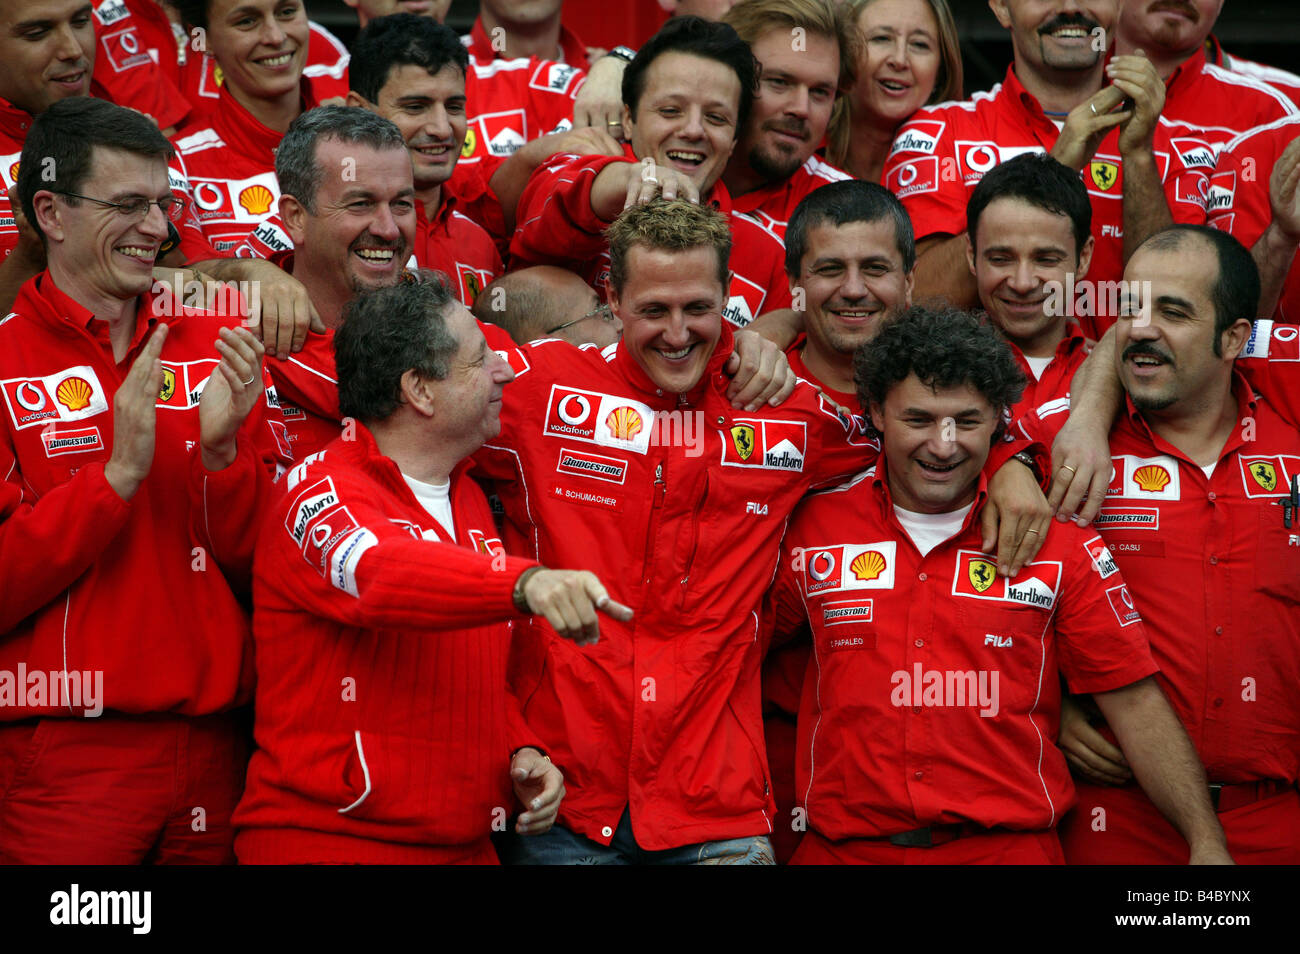 engine sport, Michael Schumacher and Ferrari team, Race driver, Winner, World champion in 2004, Formel 1, Portrait, photographer Stock Photo